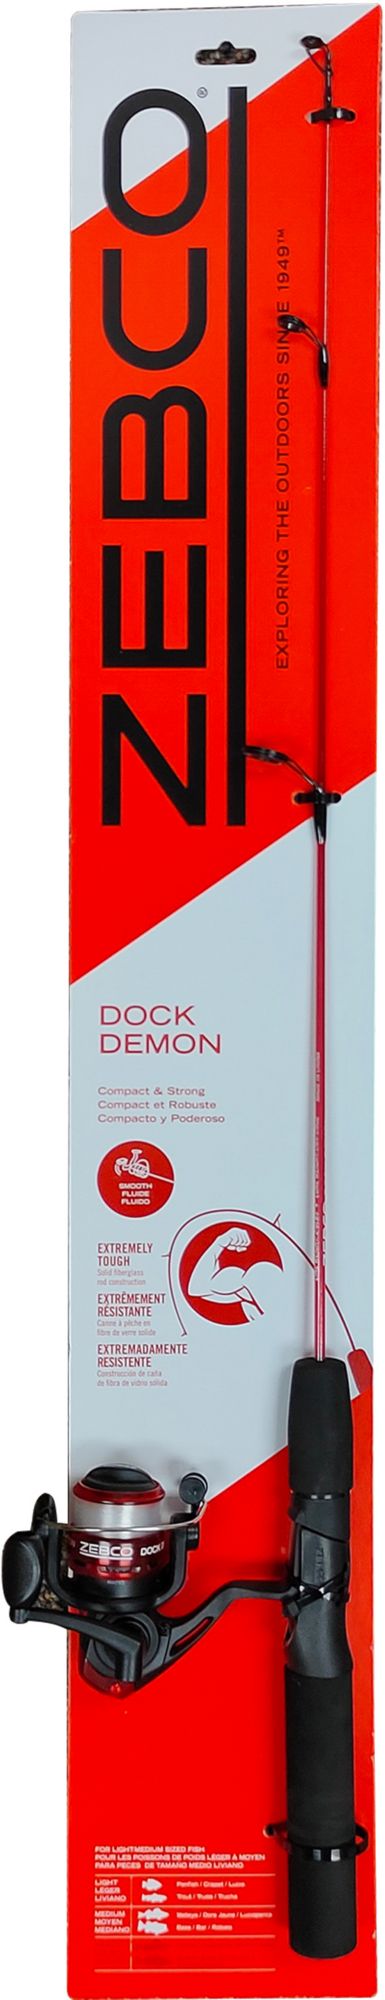 Dick's Sporting Goods Zebco Dock Demon Spinning Combo